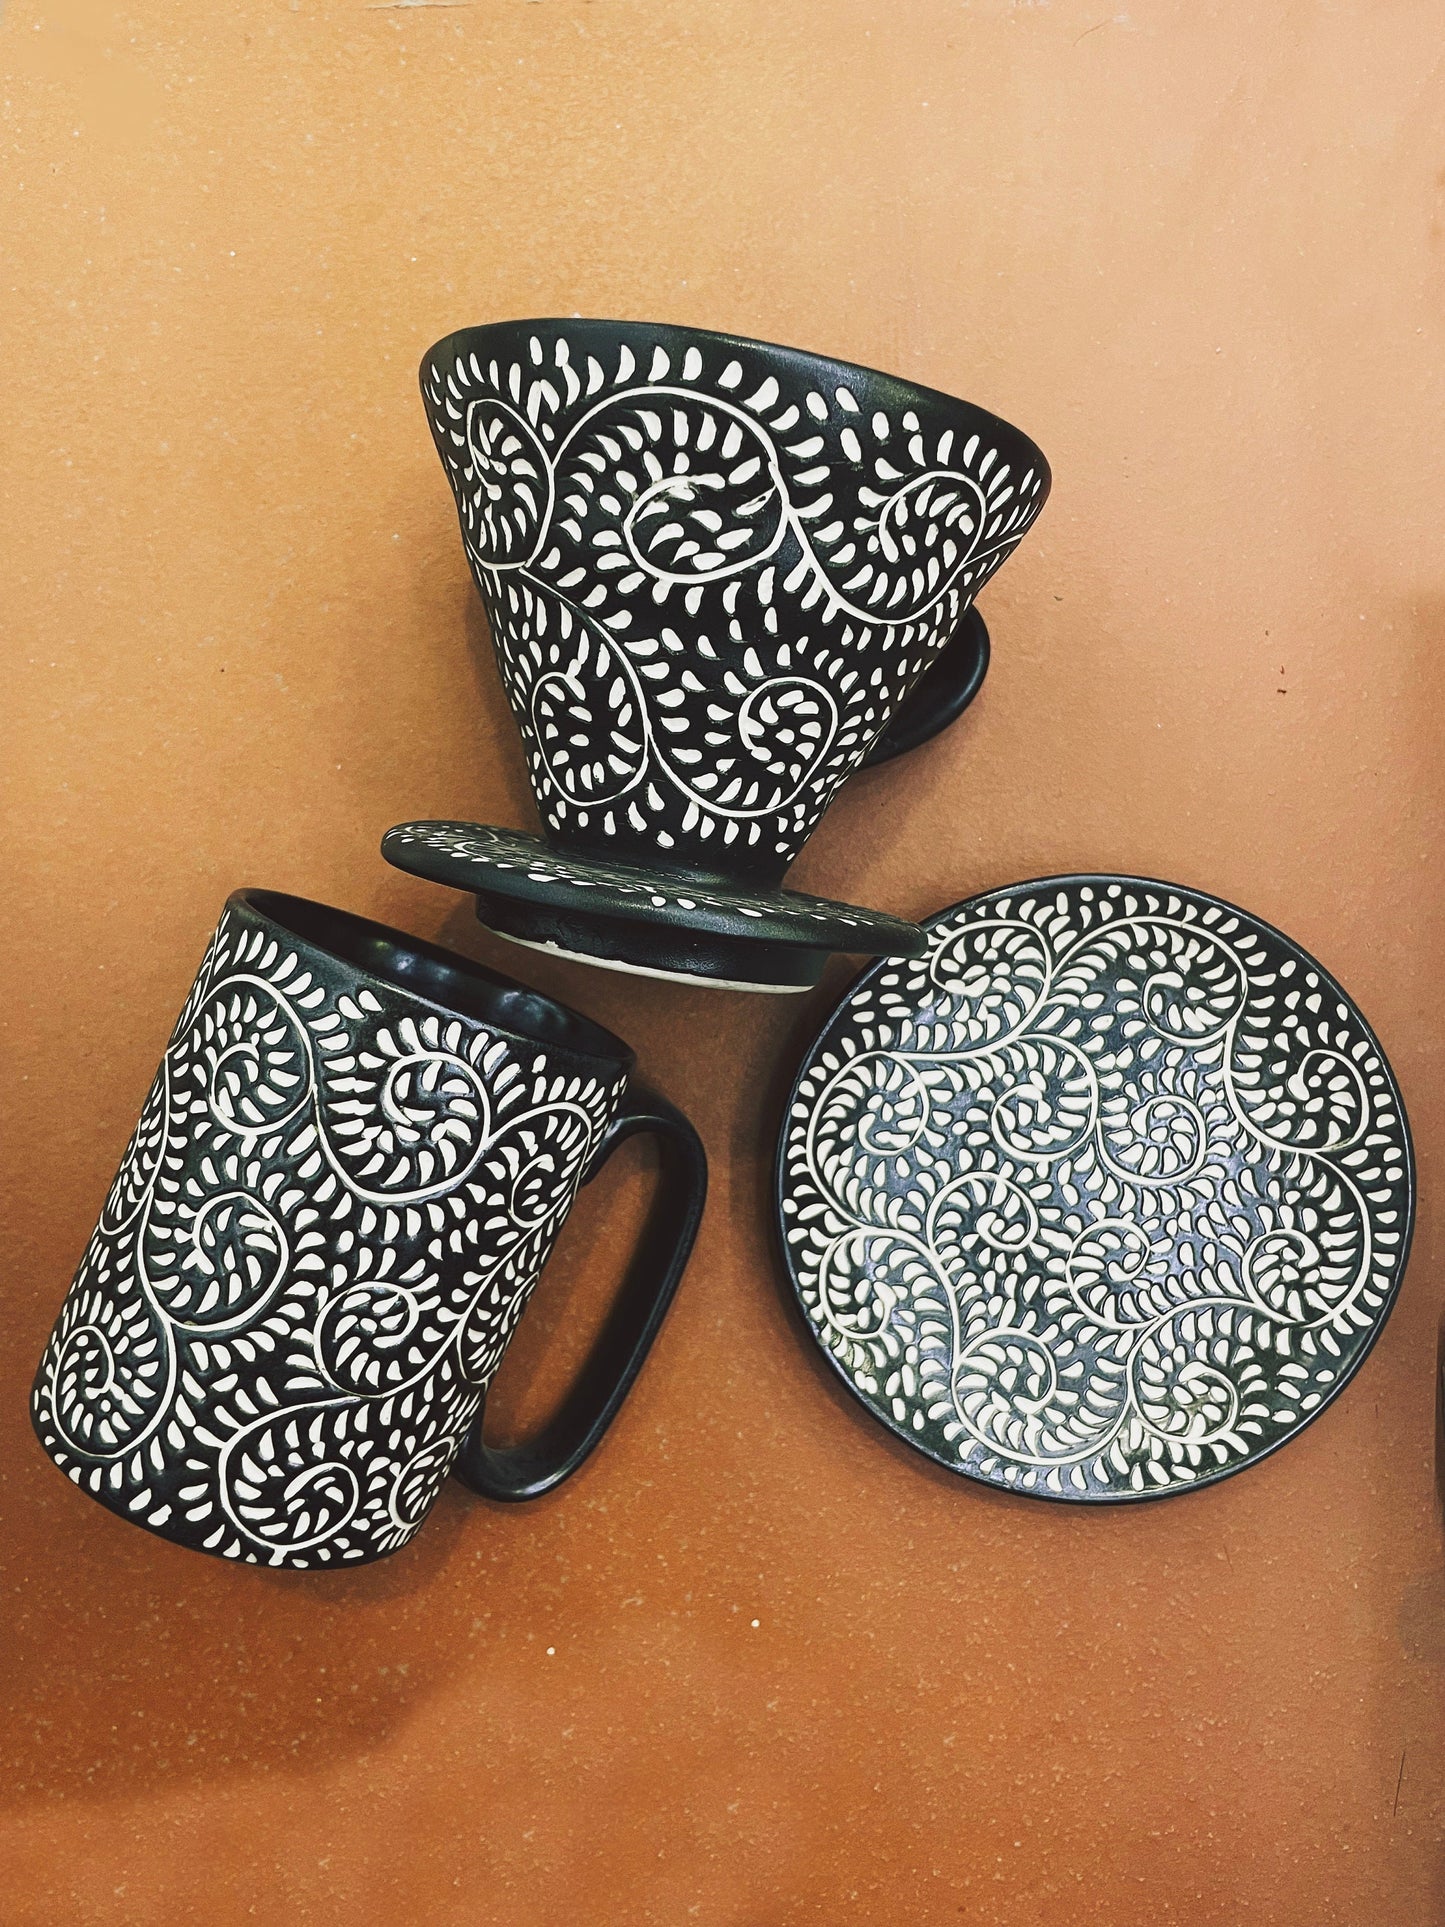 Ceramic Coffee Pour Over Coffee Filter / Ceramic Coffee Dripper Pour Over Set / Hand Carrving Ceramic Coffee Set with Mug / Home Décor.